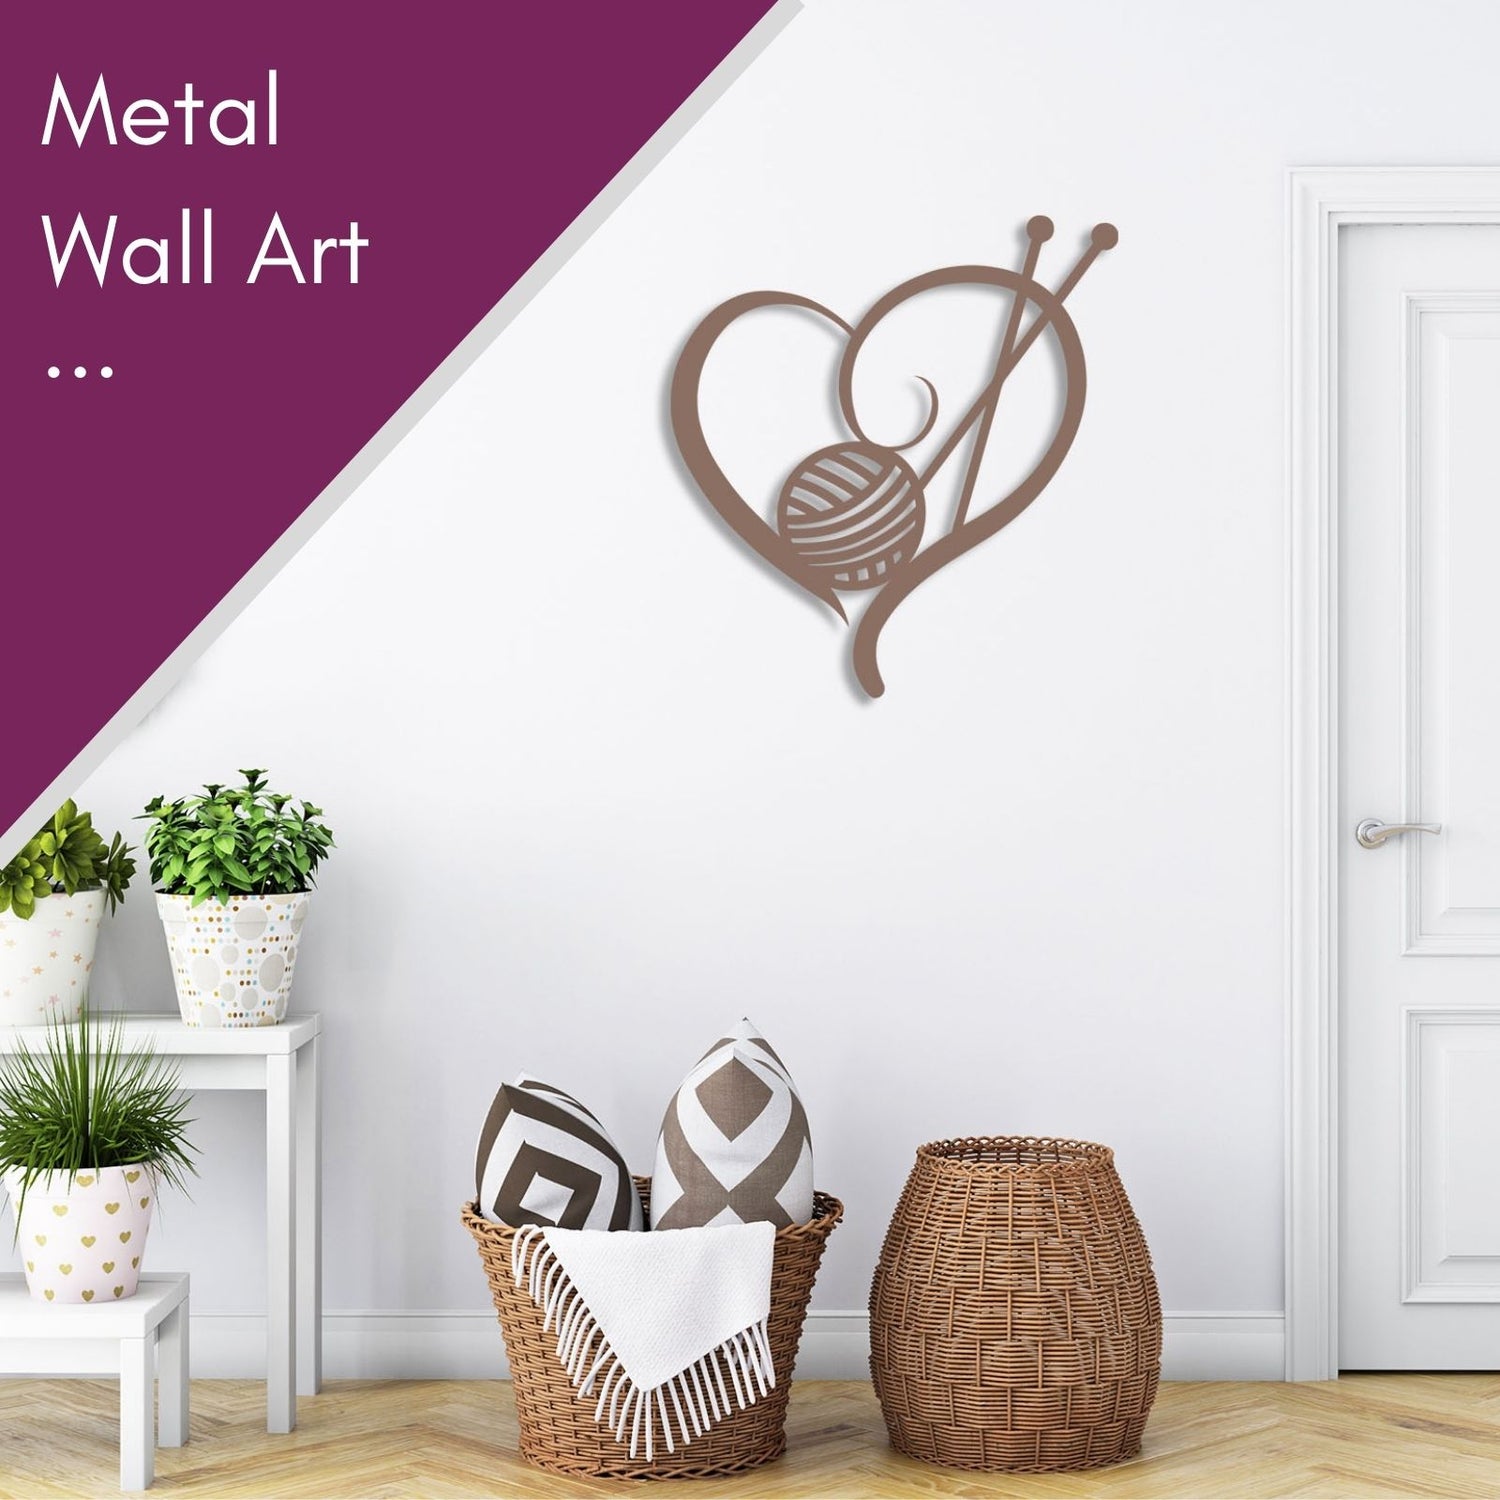 Metal Wall Art